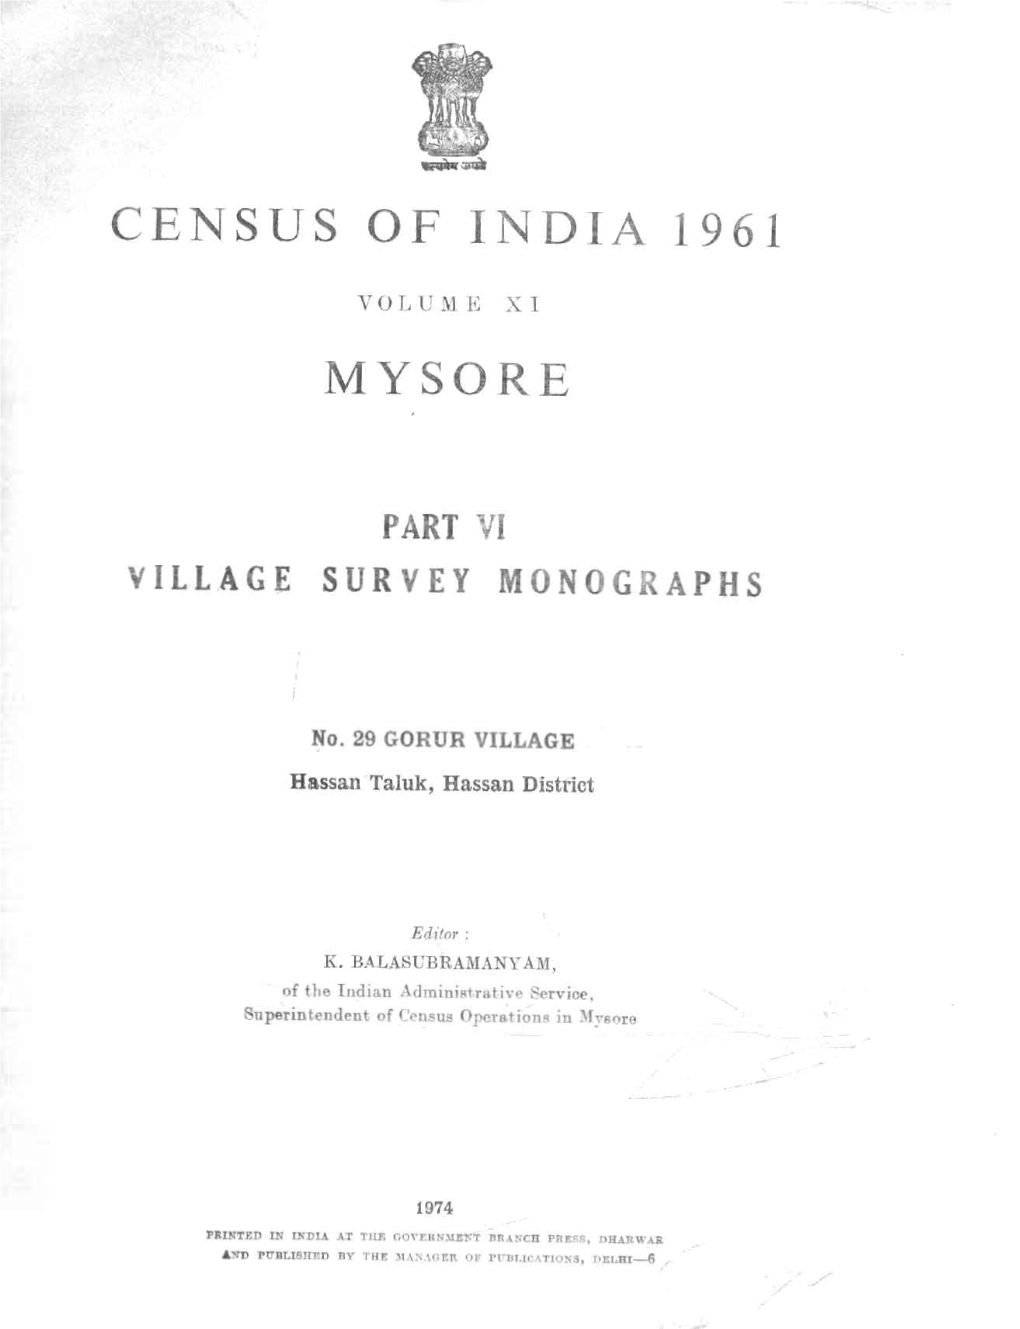 Village Survey Monographs, Gorur Village, No-29, Part VI, Vol-XI